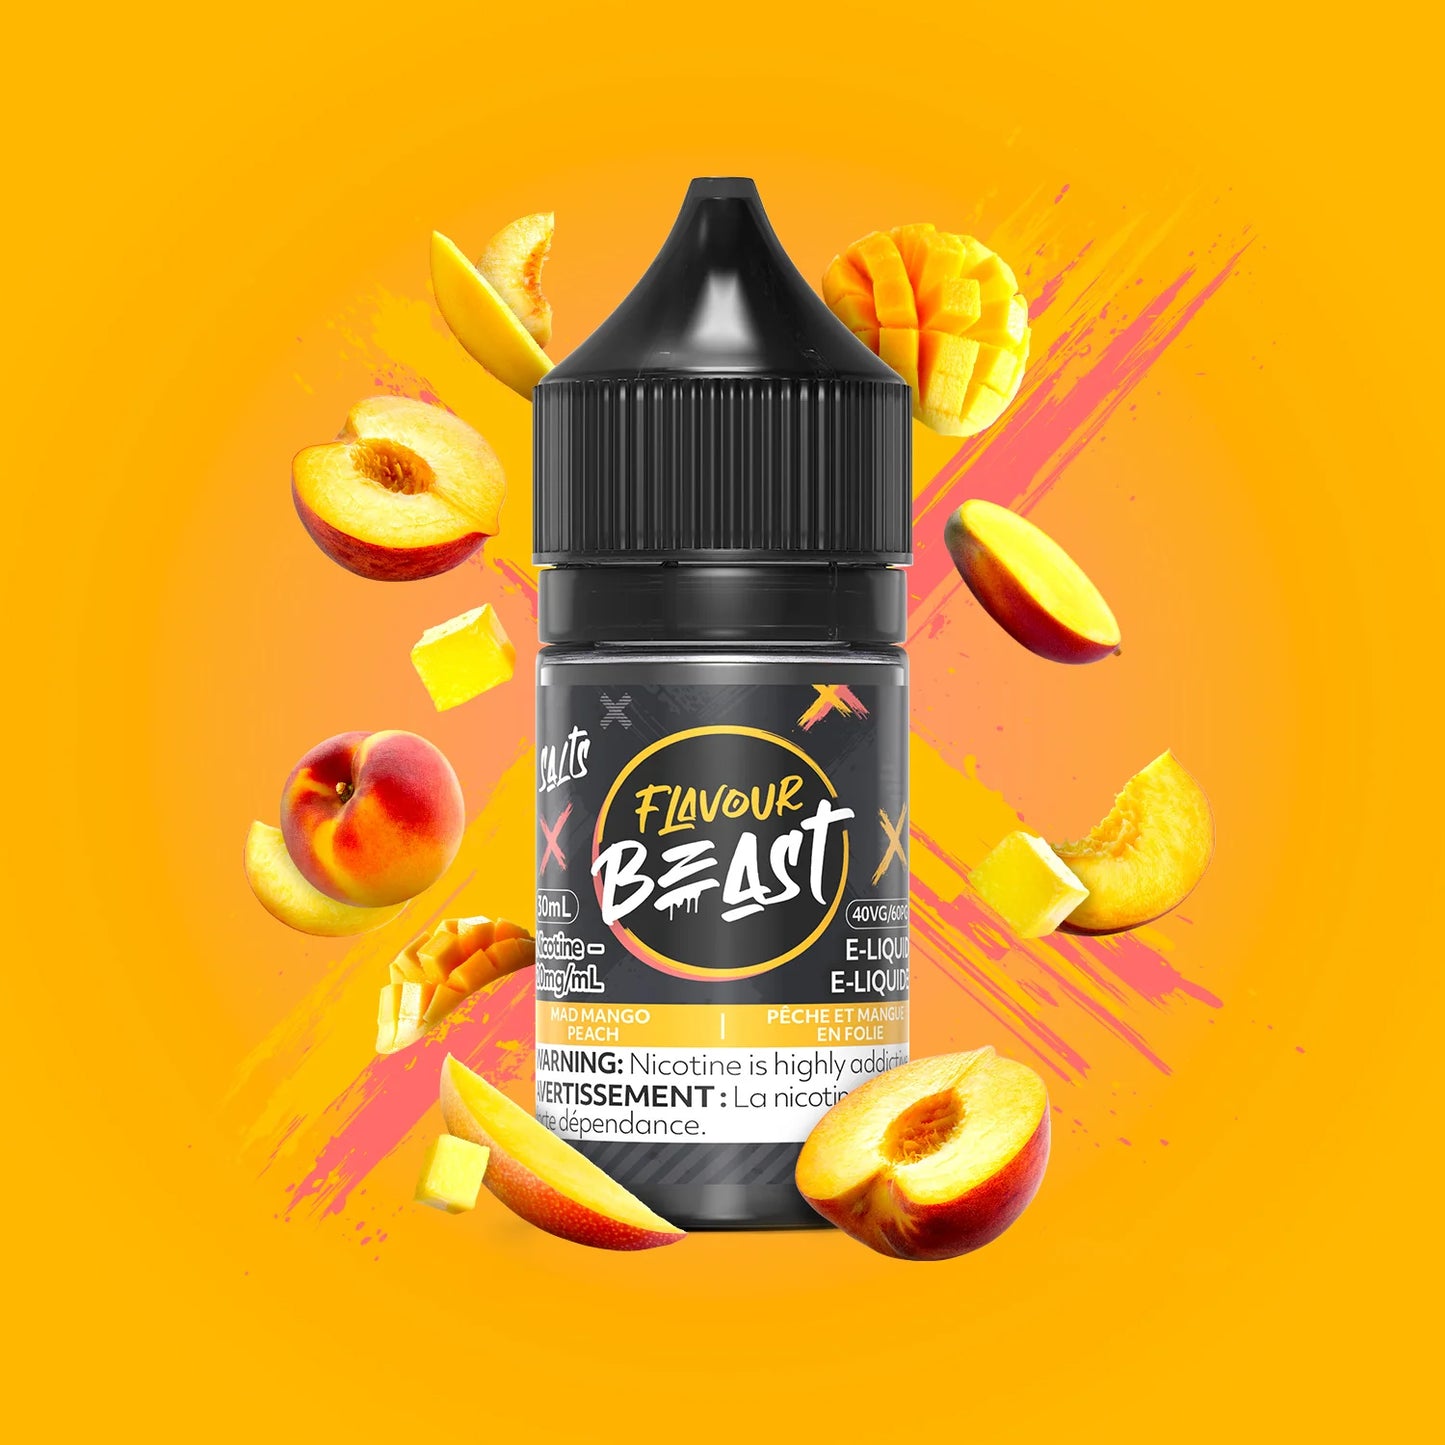 Flavour Beast - Mad Mango Peach